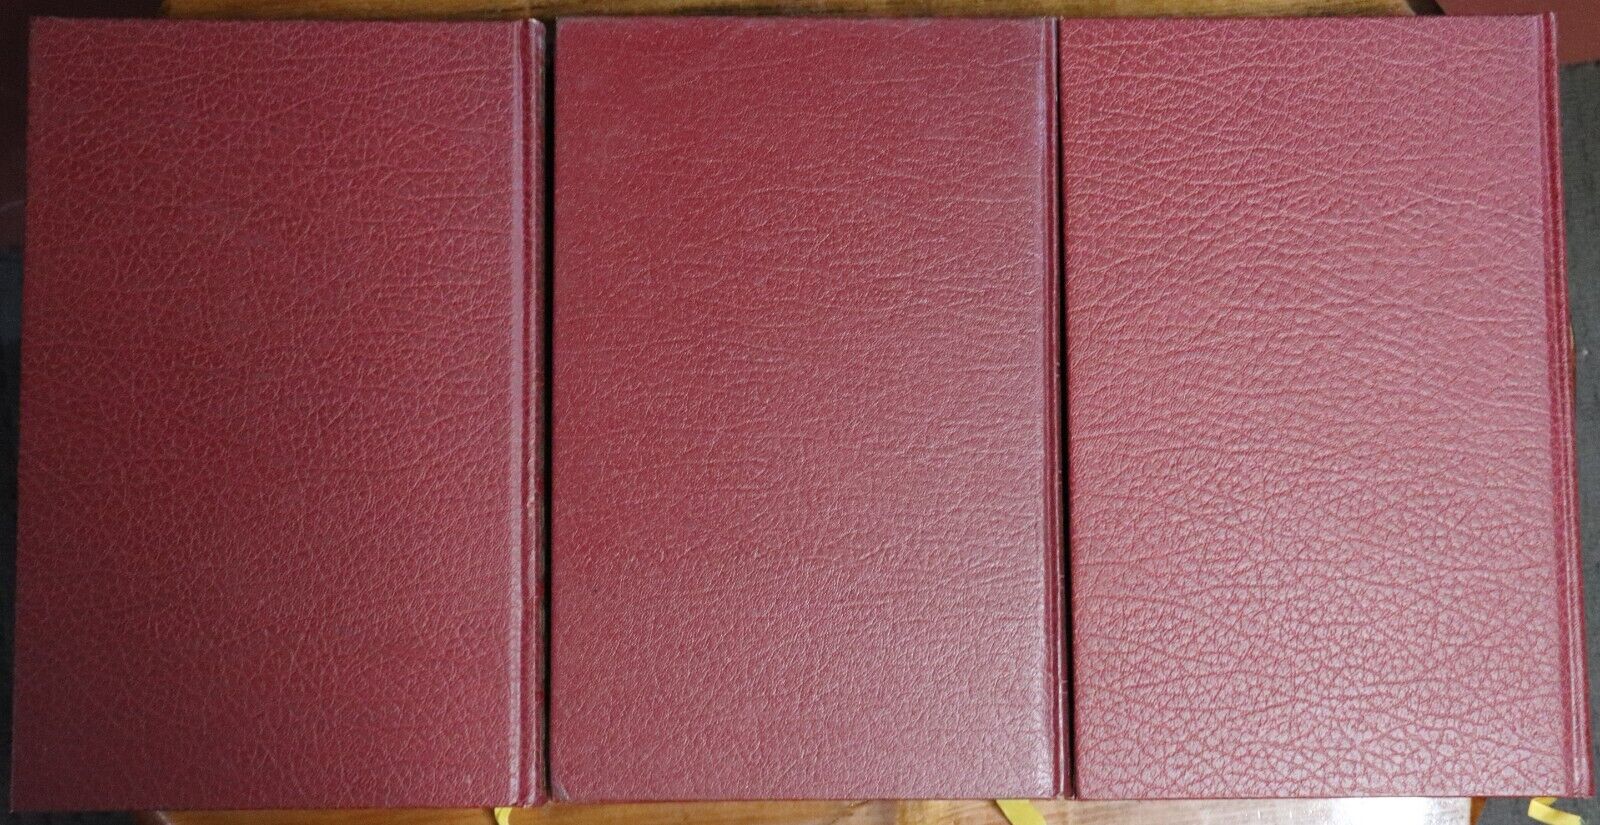 Gothic, Romanesque & 17th Century Art - 3 Volumes - 1968 - Vintage Art Books